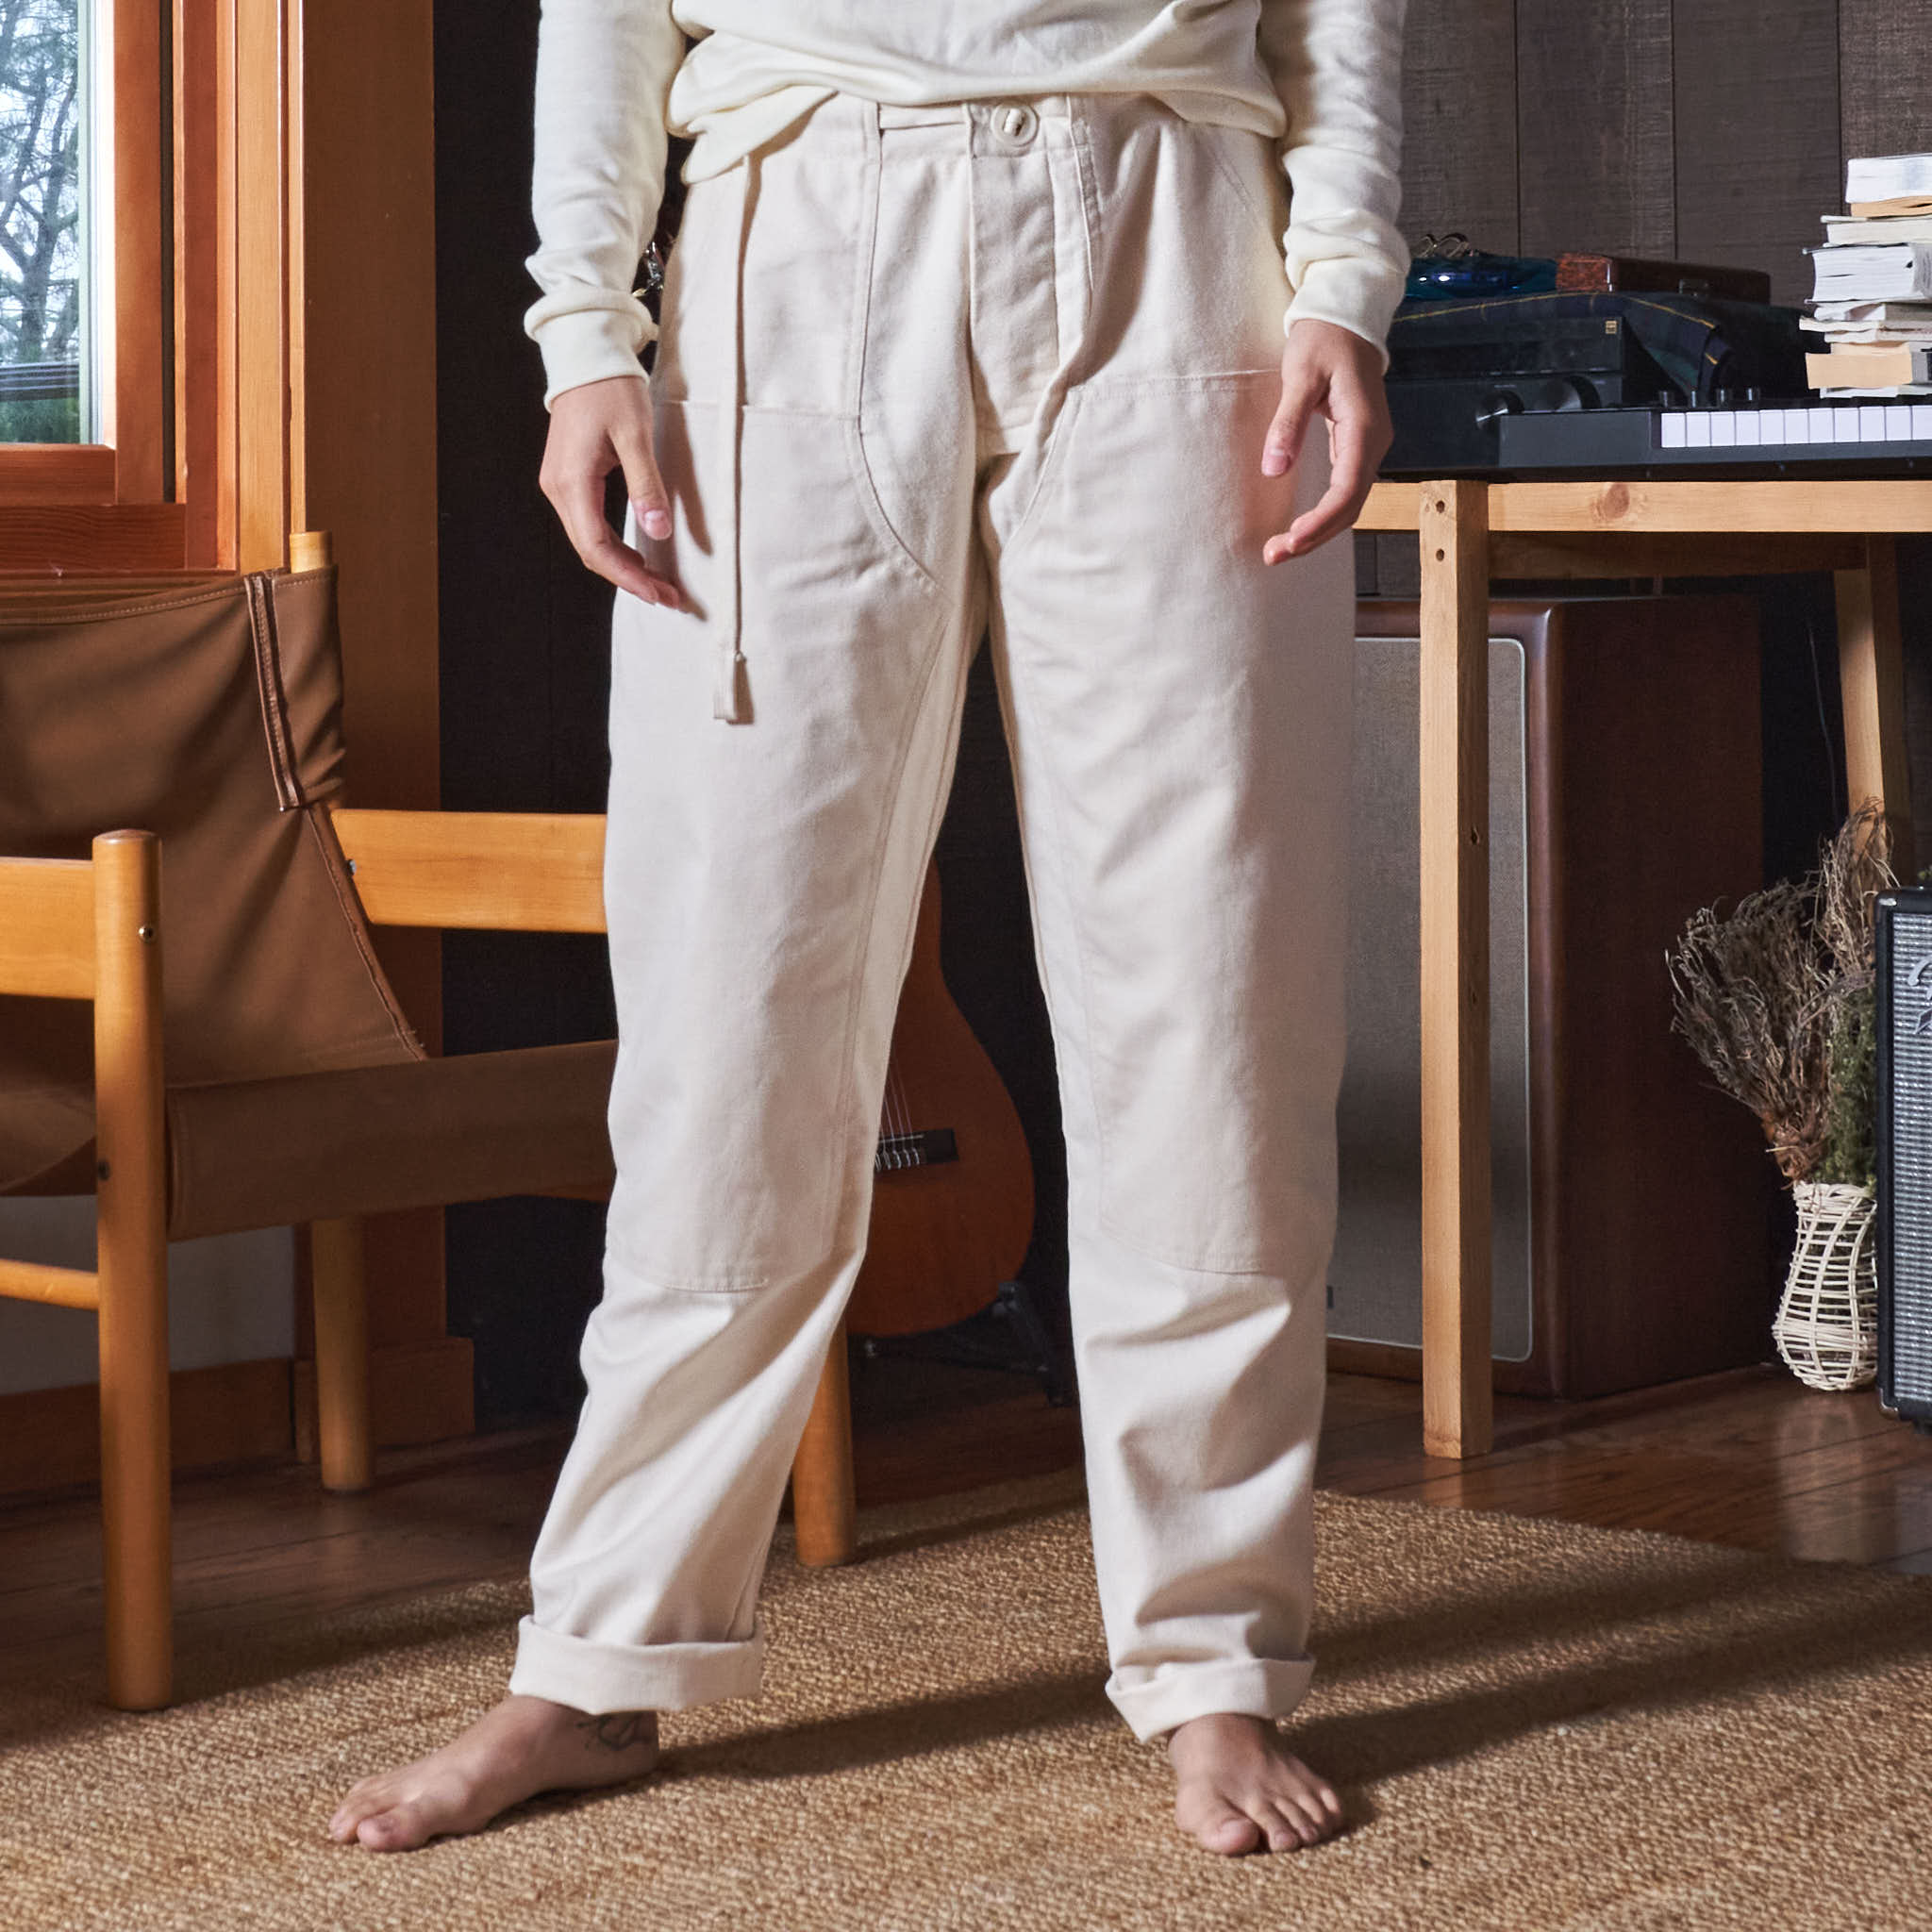 All We Remember 8-Pocket Maker Pant Indigo - Made in USA | Pants |  Independence